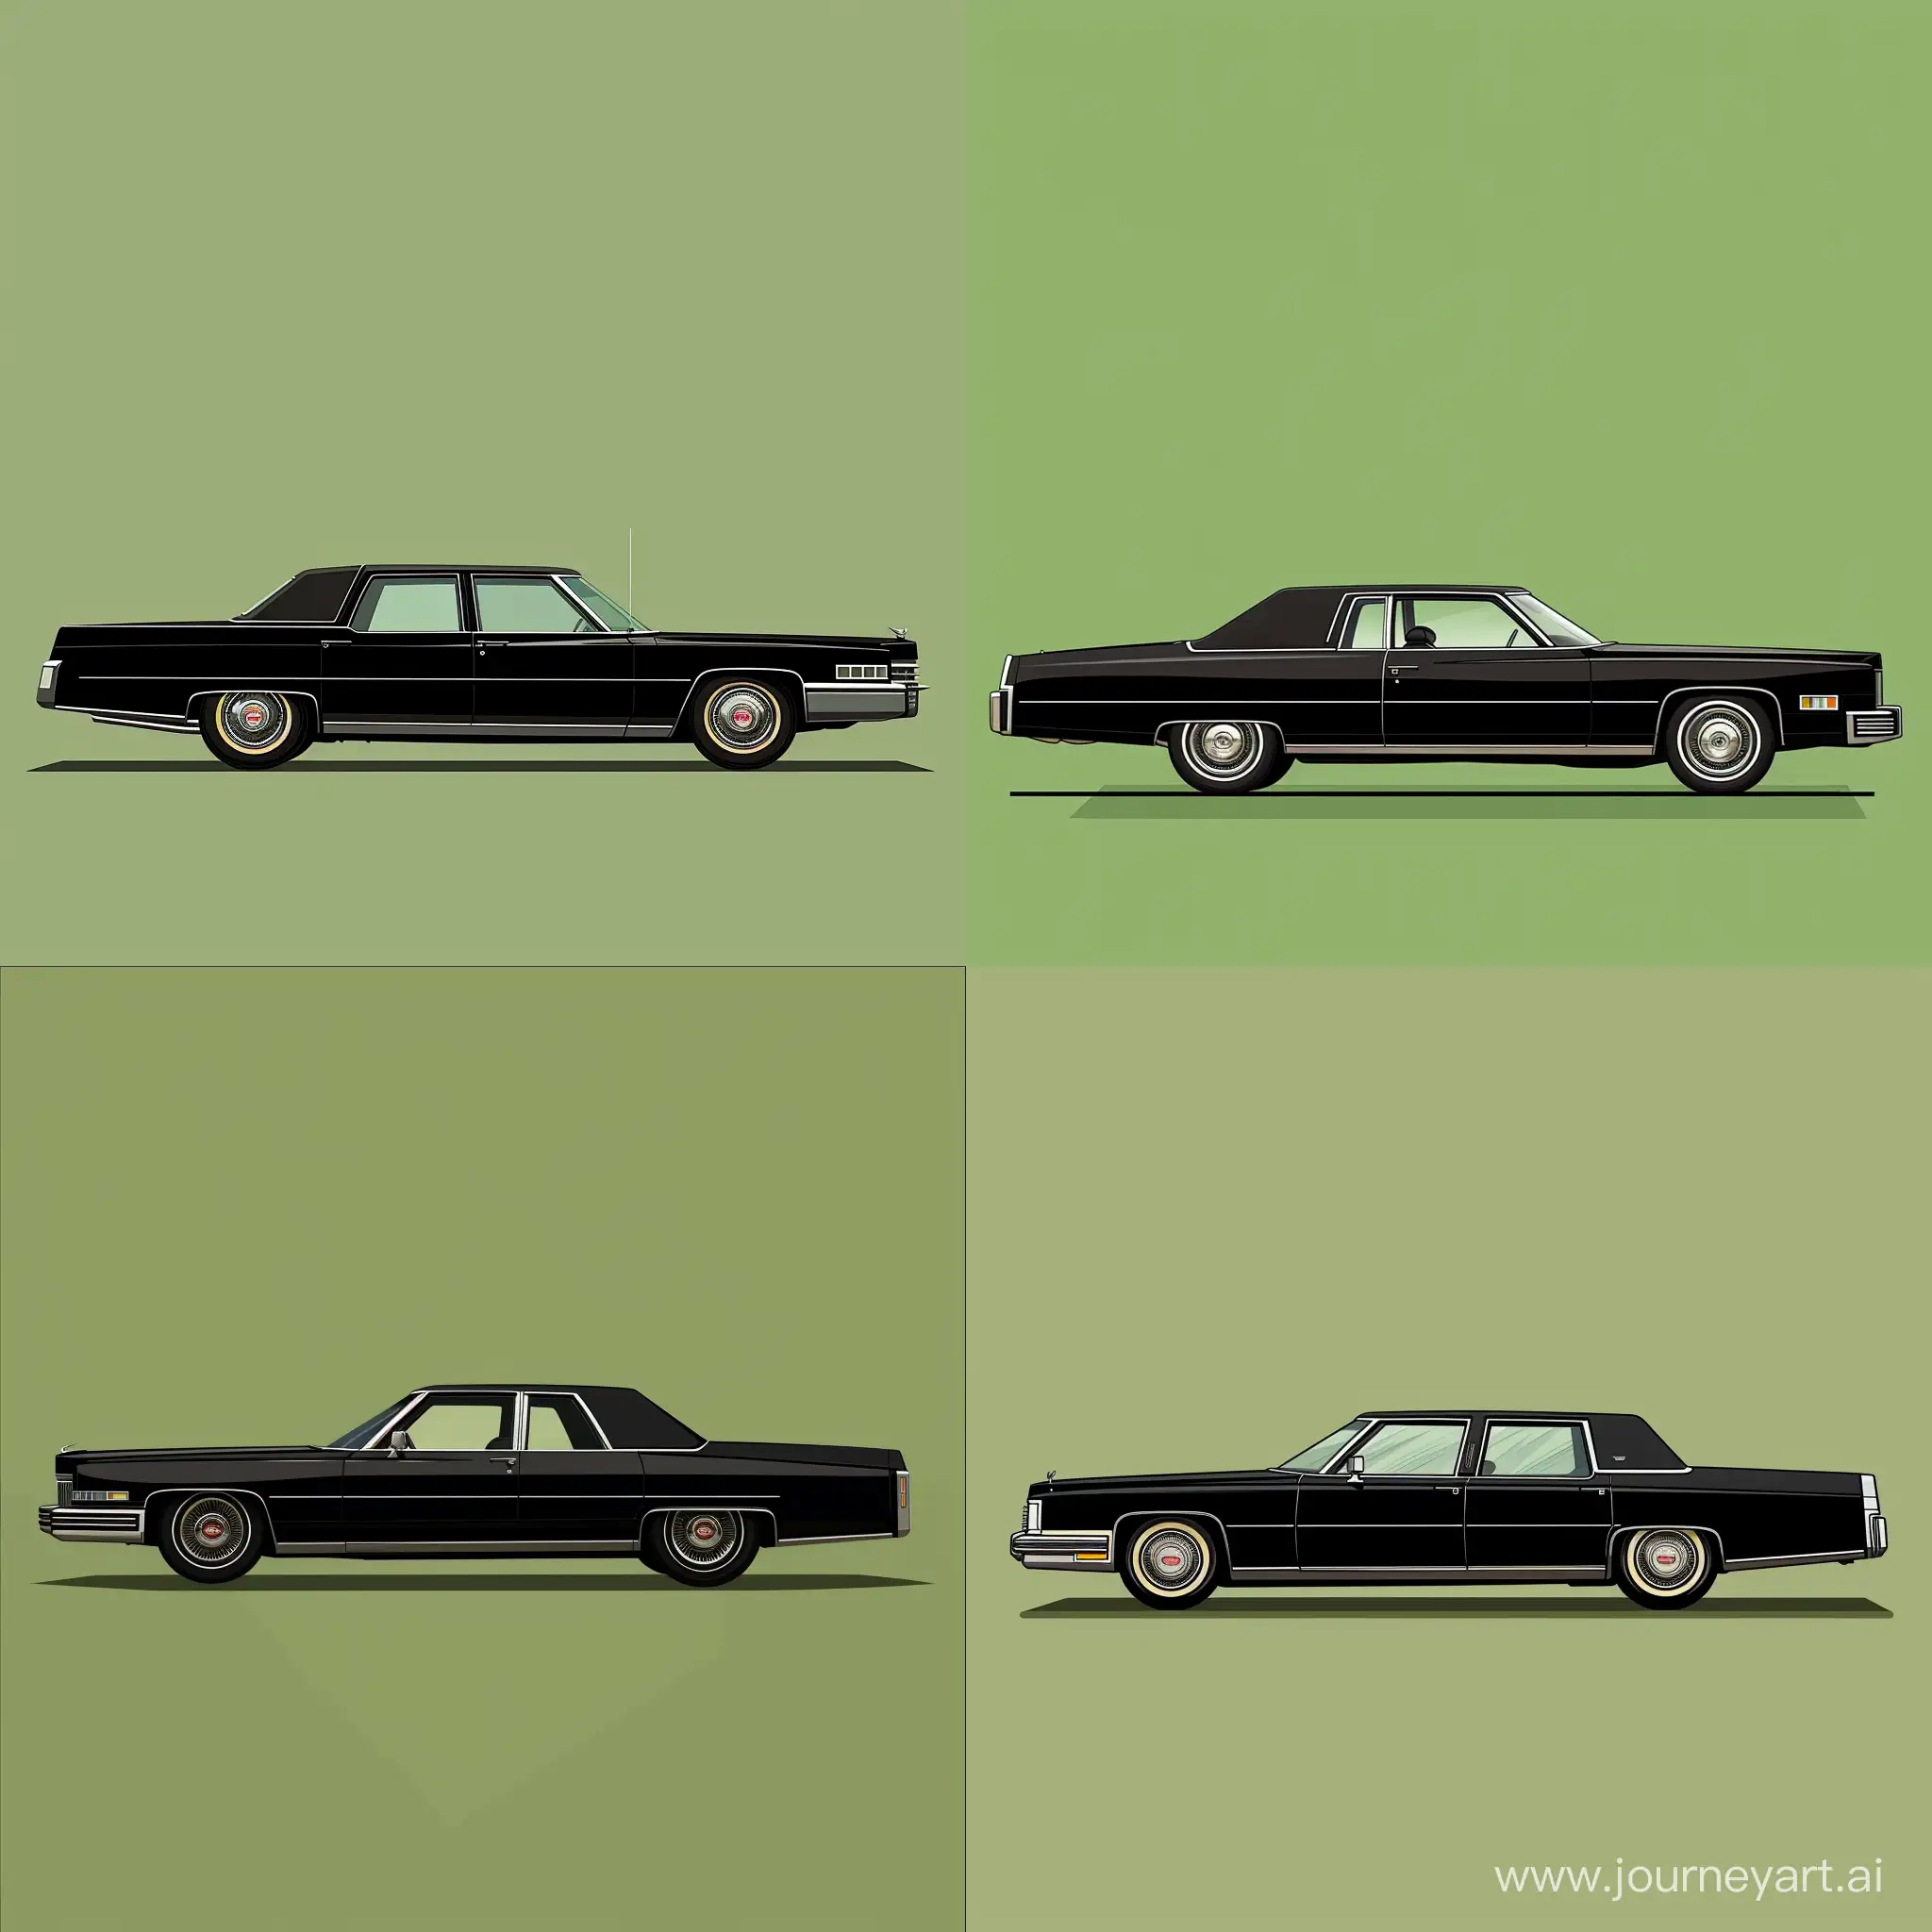 Minimalism 2D 2/3 View Illustration of: Black Cadillac Brougham, Simple Hunter Green, Adobe Illustrator Software, High Precision